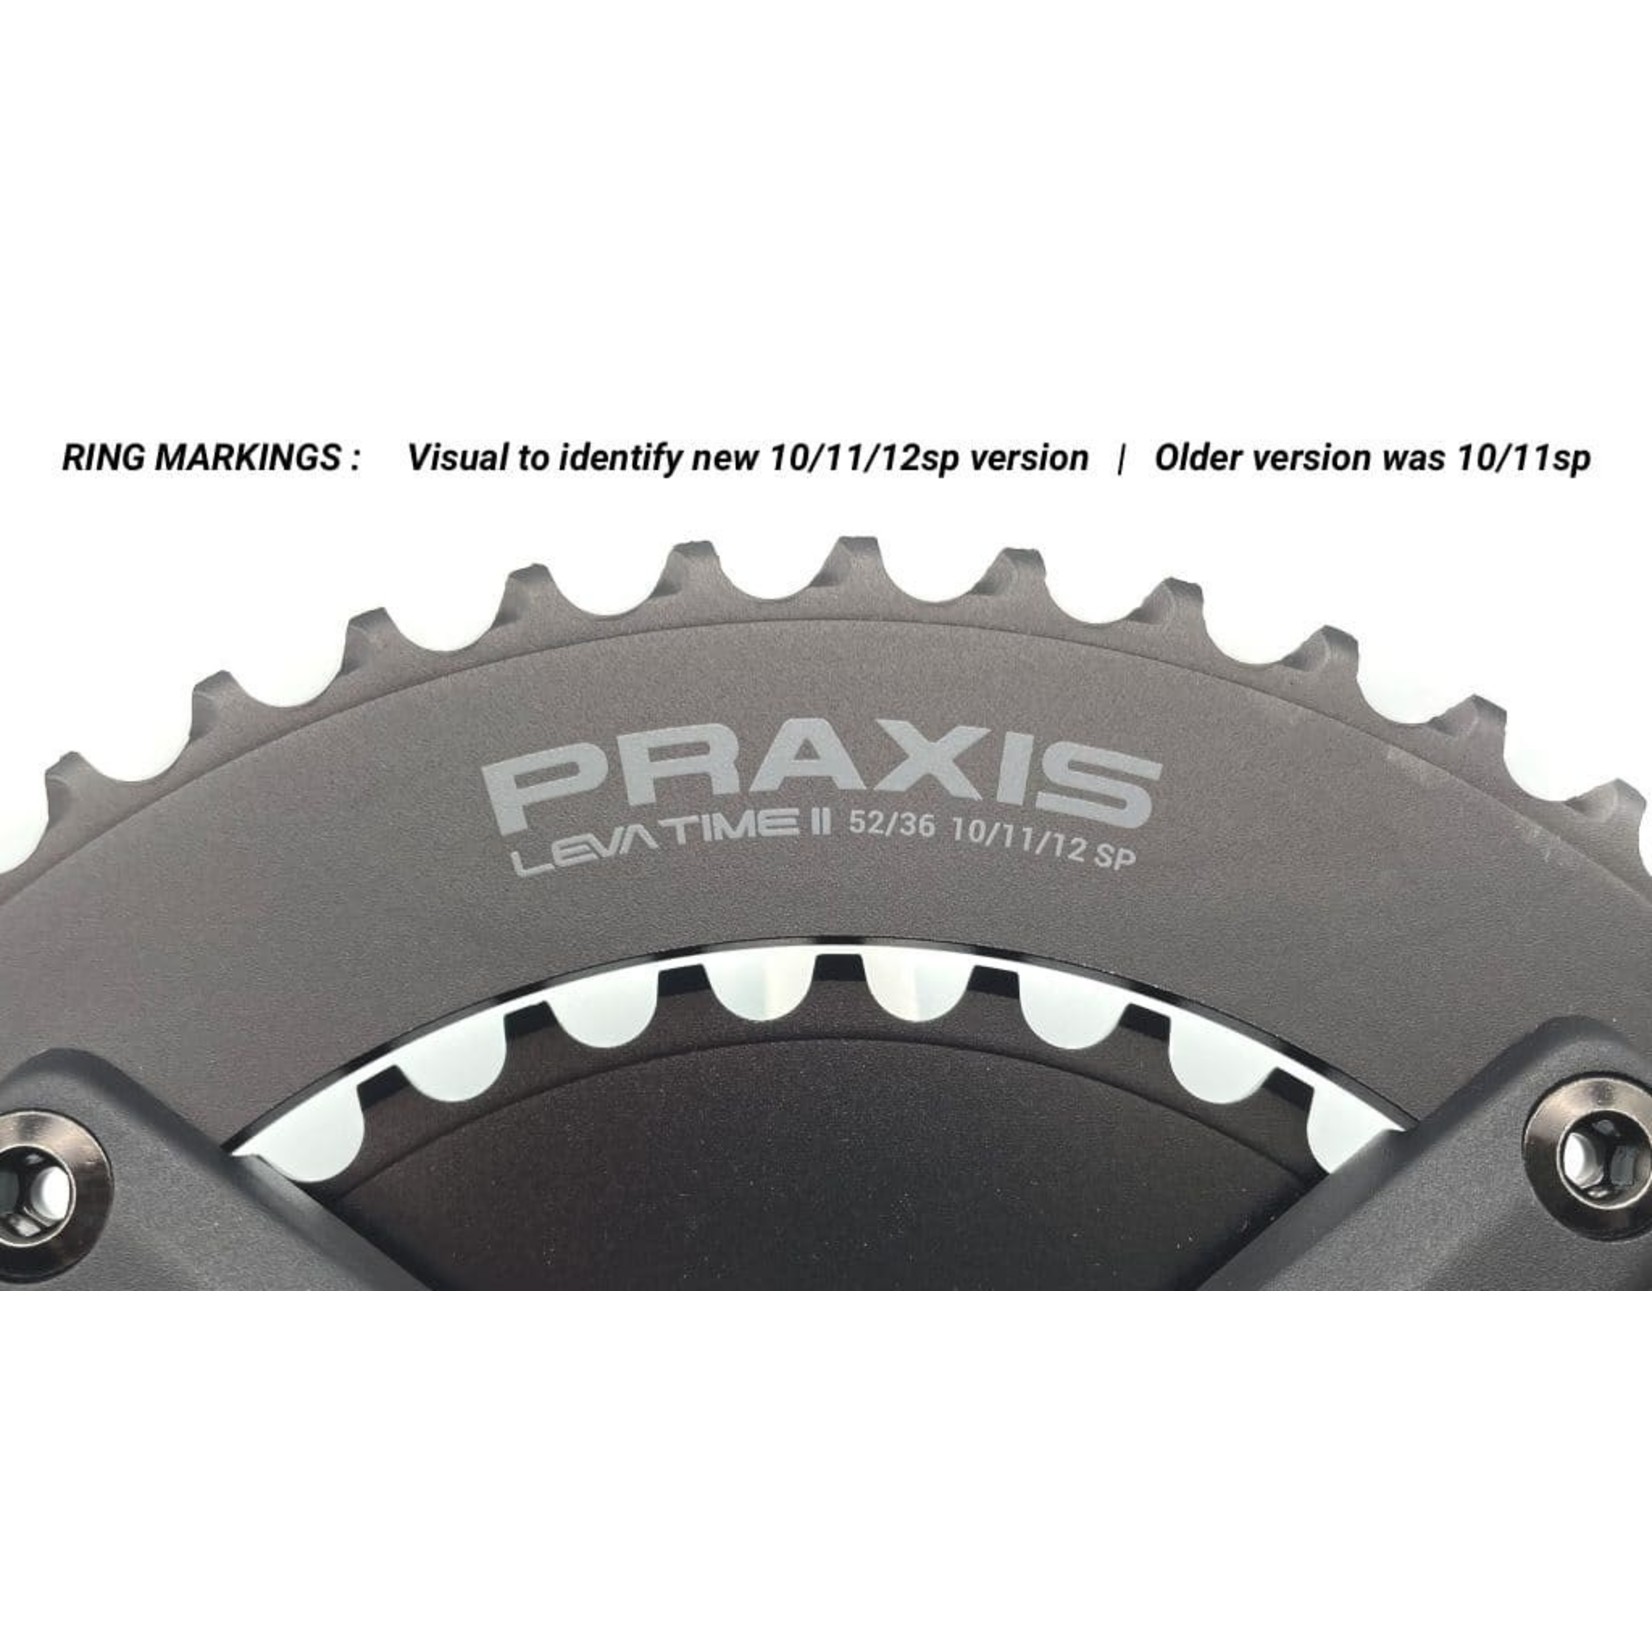 Praxis Praxis Road cranks - Alba - Alloy,170mm 48/32